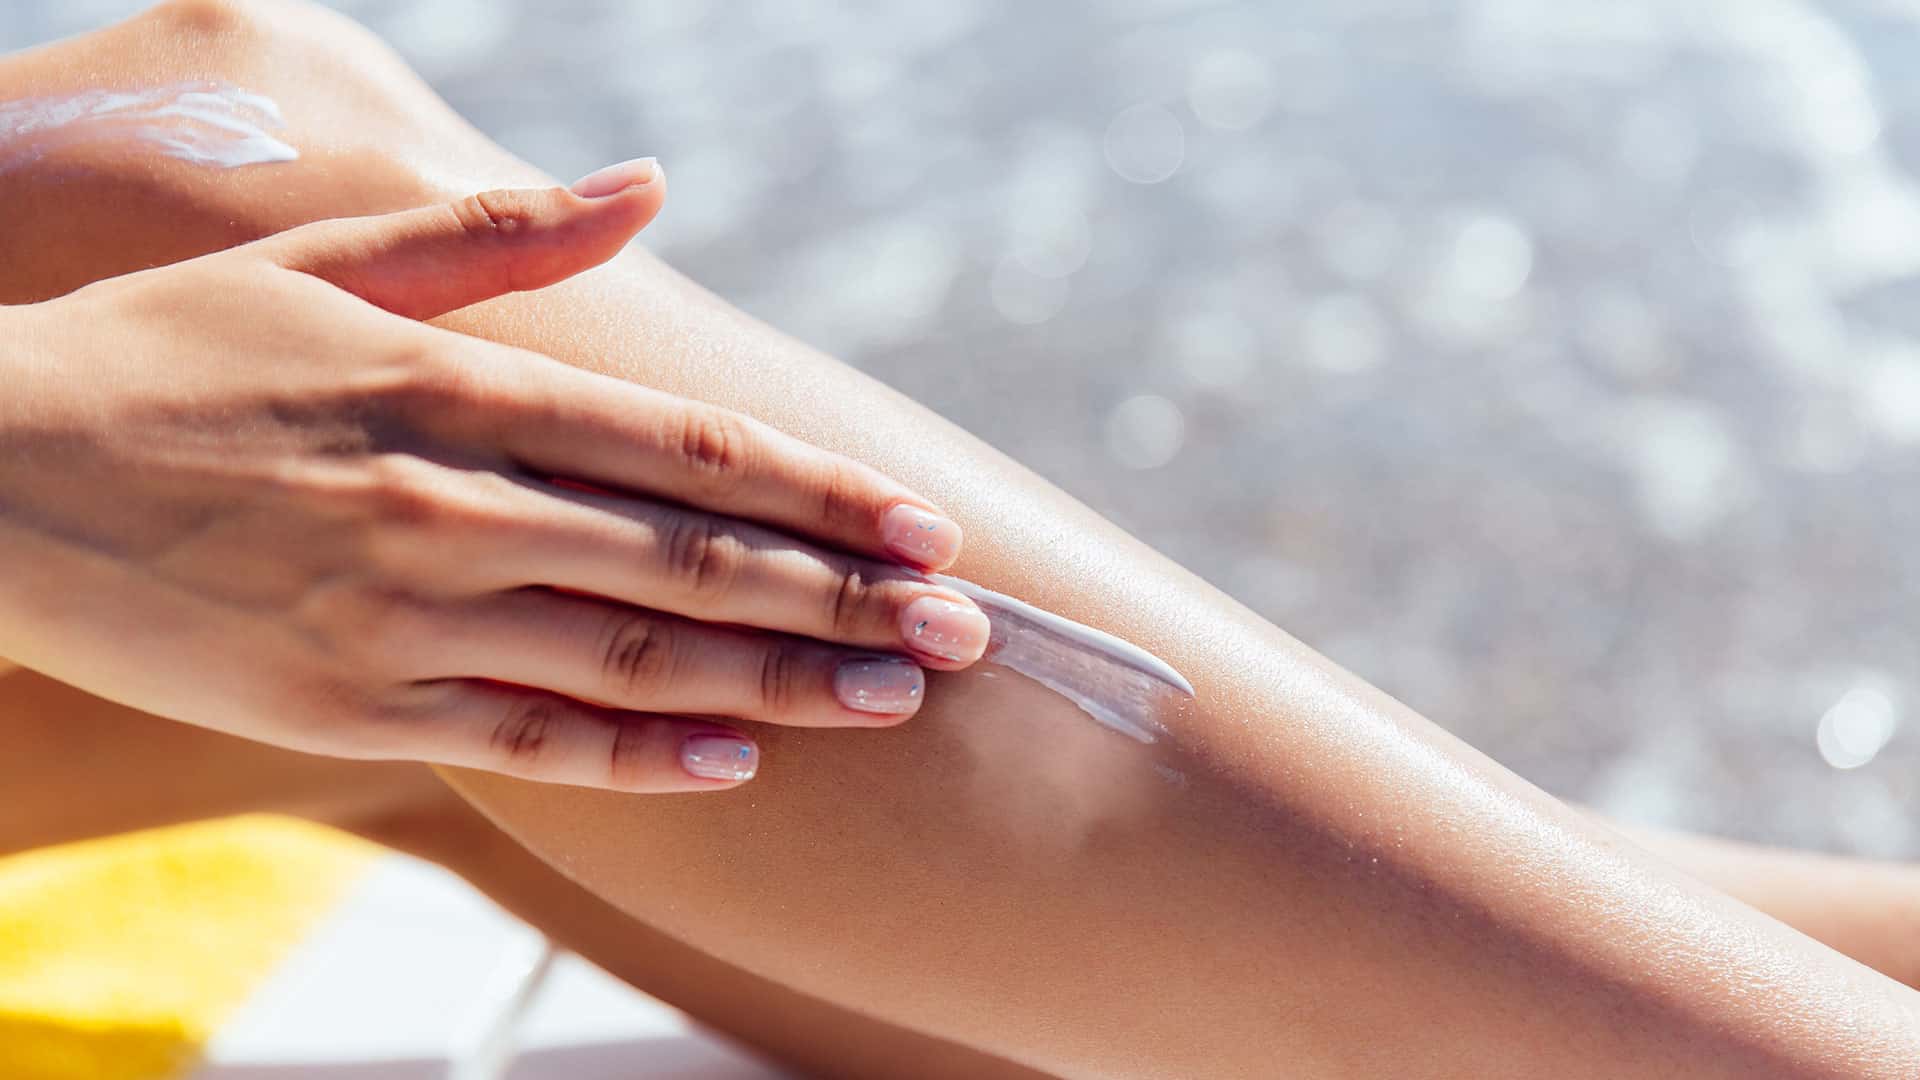 Use of sunscreen on the affected area - vitiligo